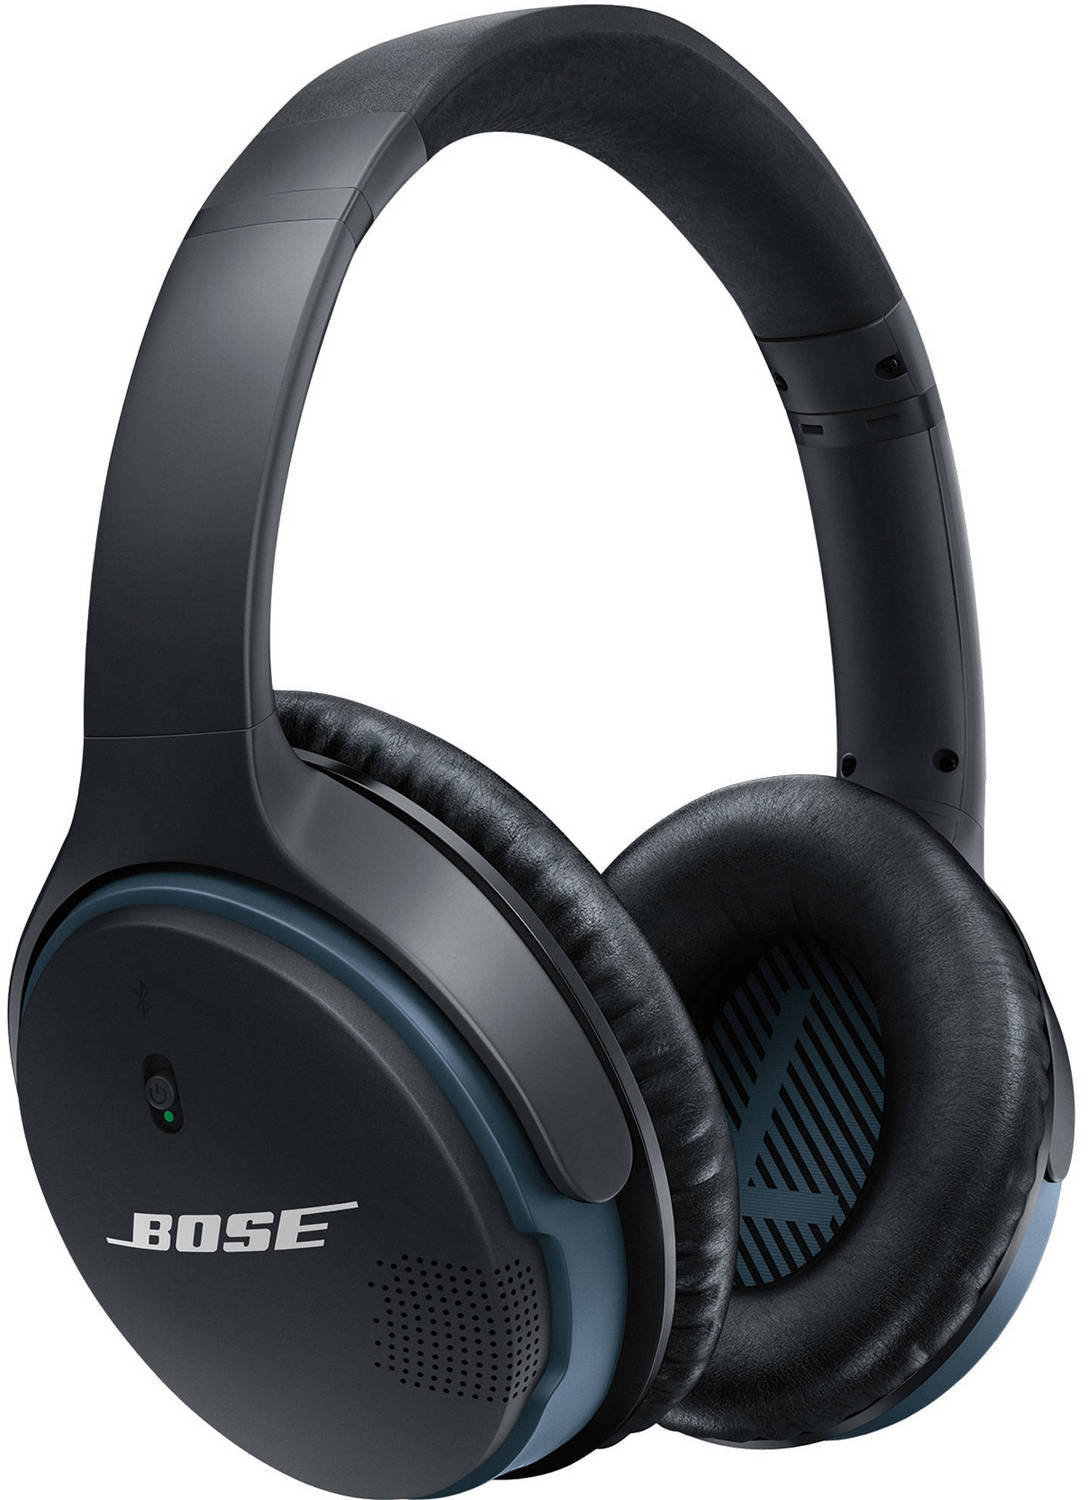 Drahtlose On-Ear-Kopfhörer Bose SoundLink II Schwarz